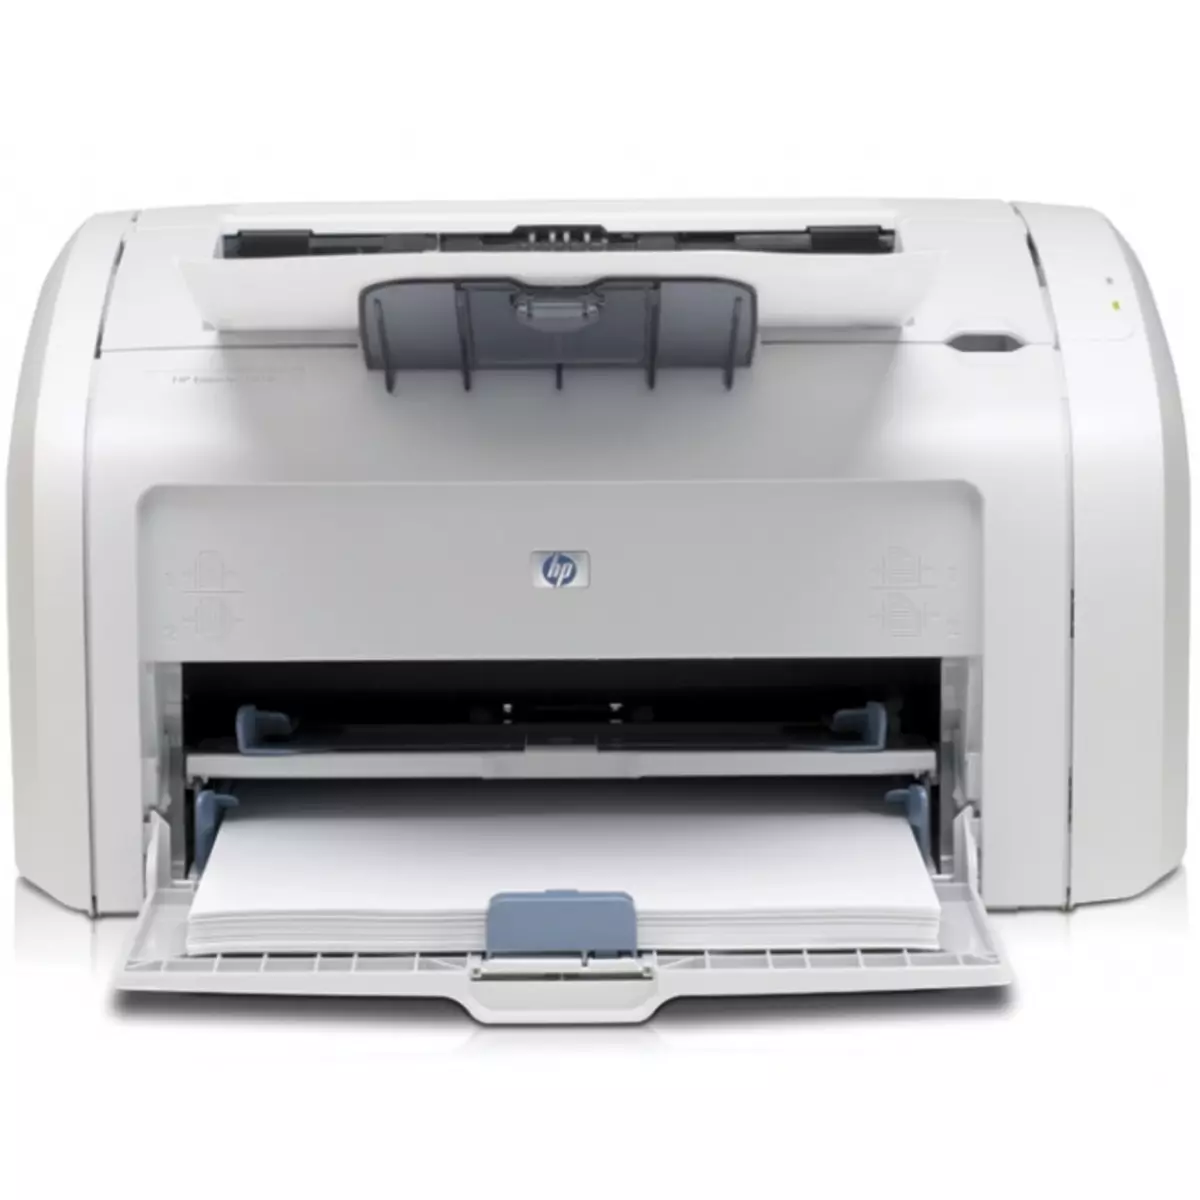 Installing the HP LaserJet 1018 printer